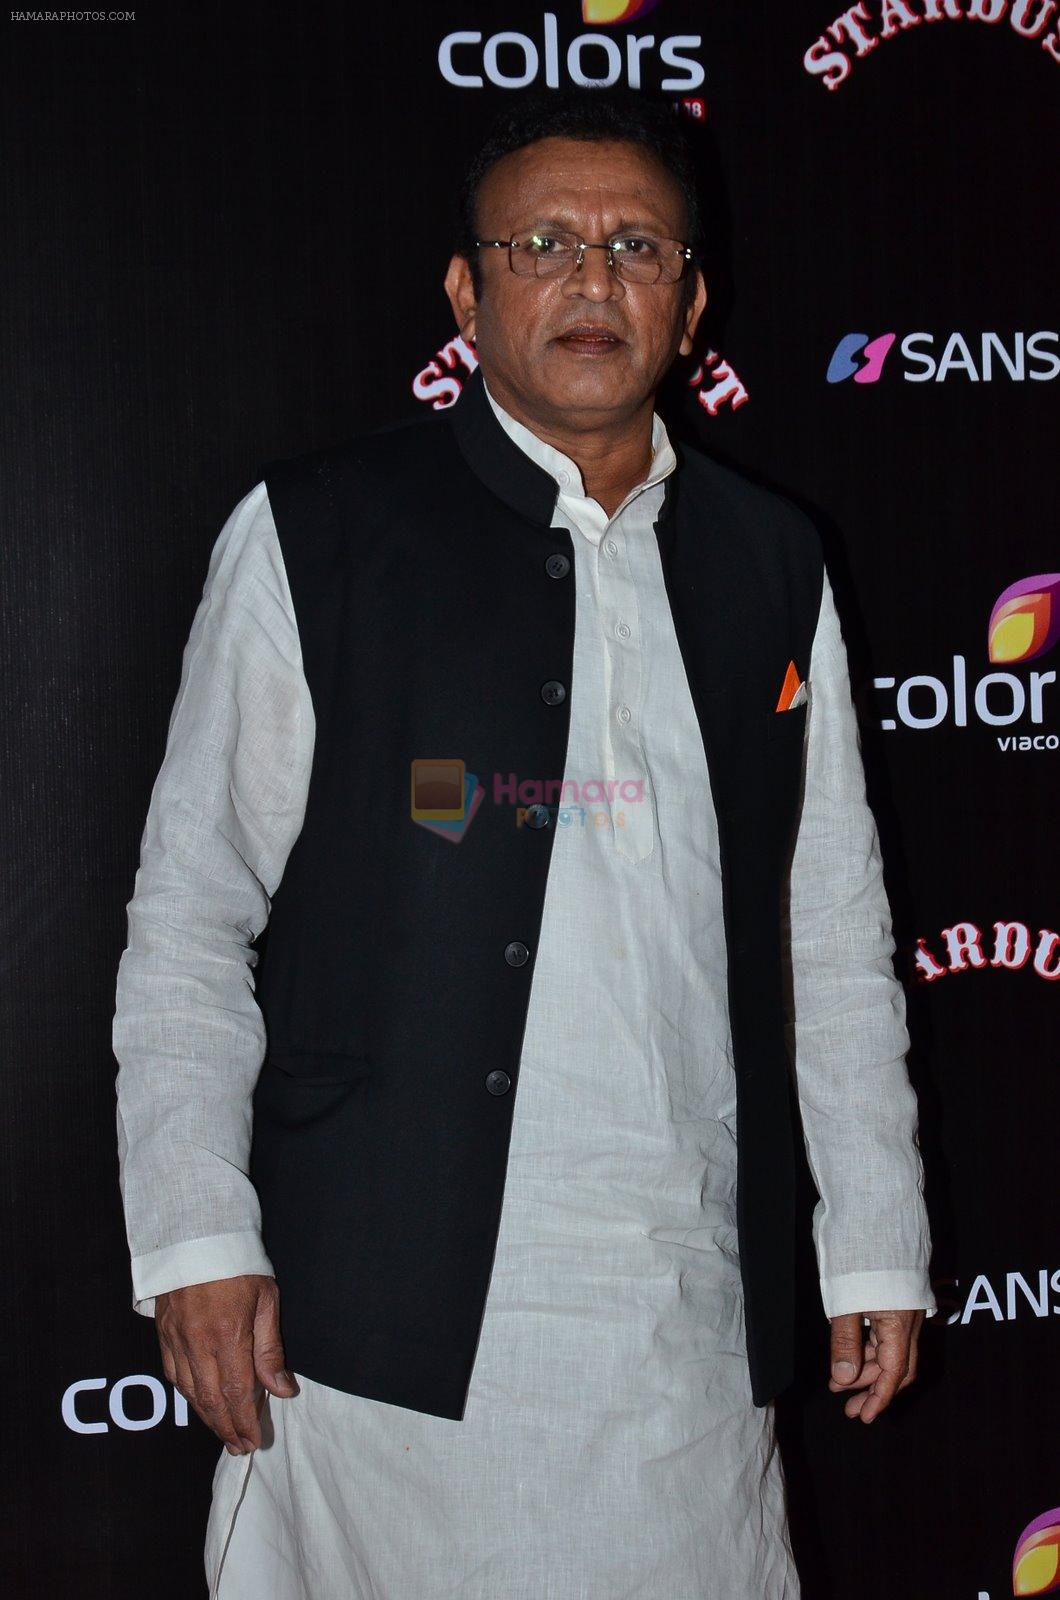 Annu Kapoor at Sansui Stardust Awards red carpet in Mumbai on 14th Dec 2014